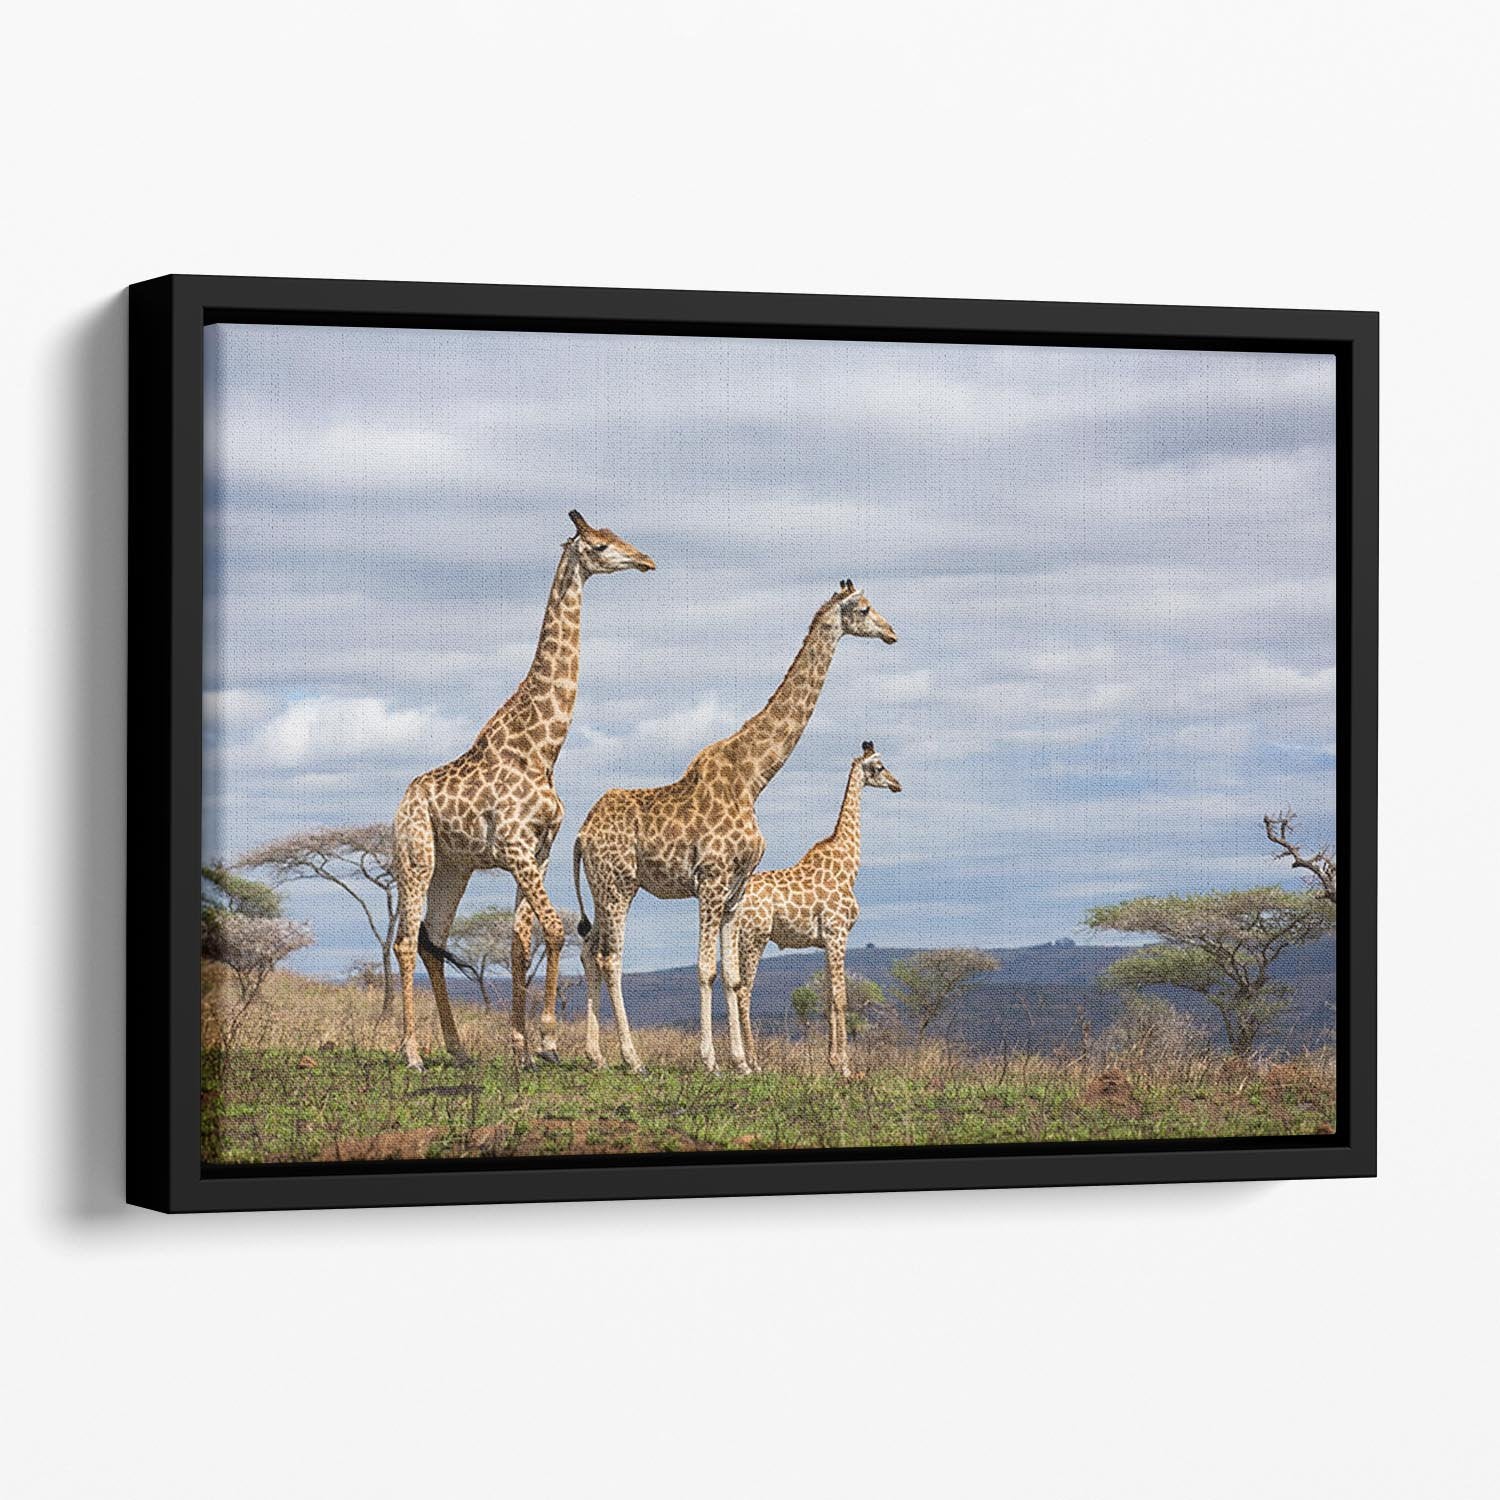 Giraffes in south africa game reserve Floating Framed Canvas - Canvas Art Rocks - 1